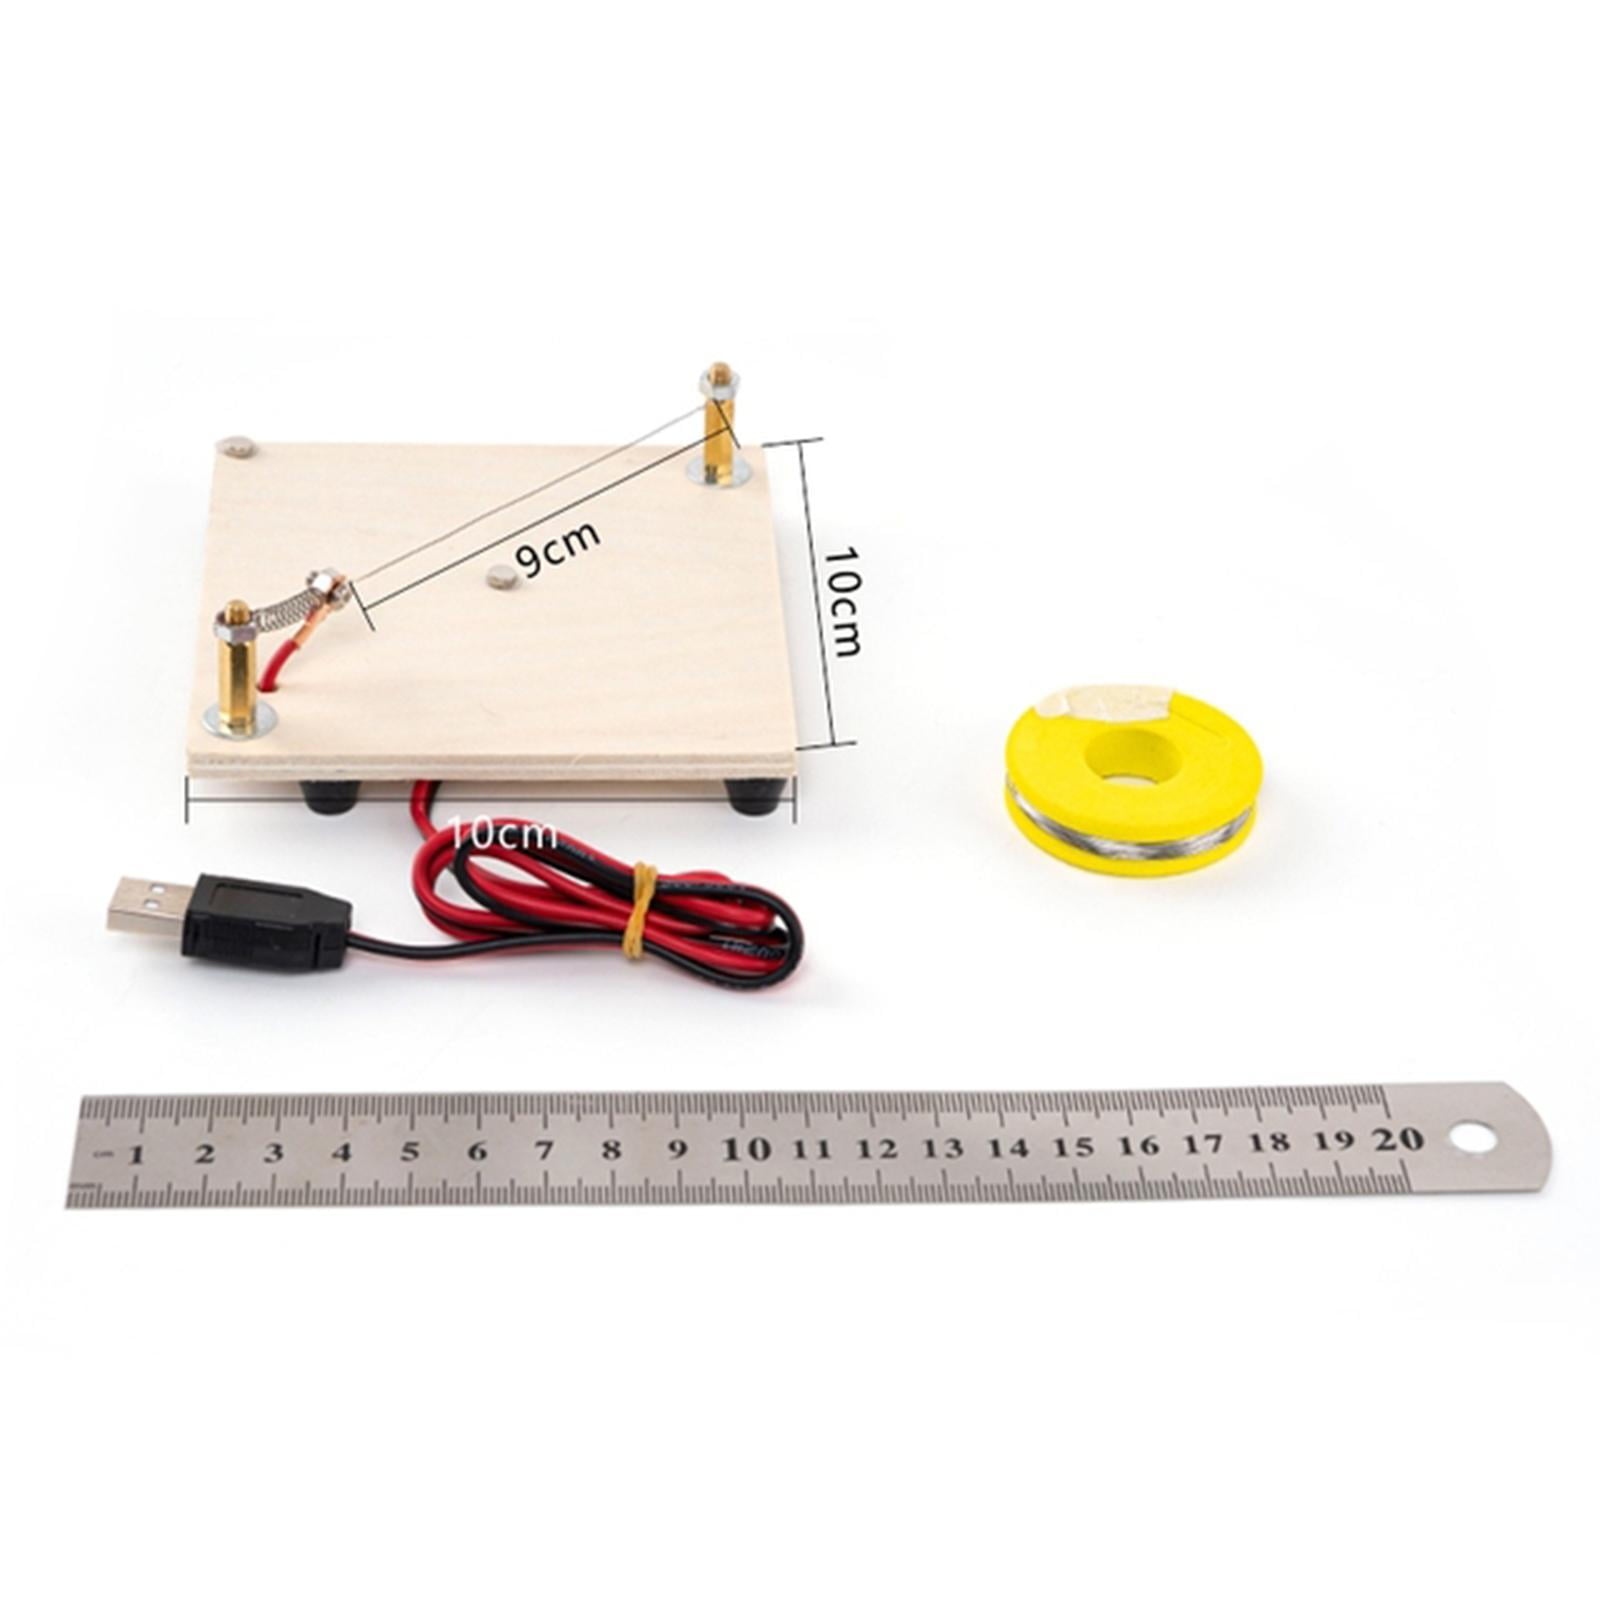 Hot Ribbon Cutter Machine, Geevorks Webbing Cutter 0-700 Adjustable,diy Rope Band Craft Manual Cut Tool for Lace/braid/ribbon/nylon Band, Ac110-240v